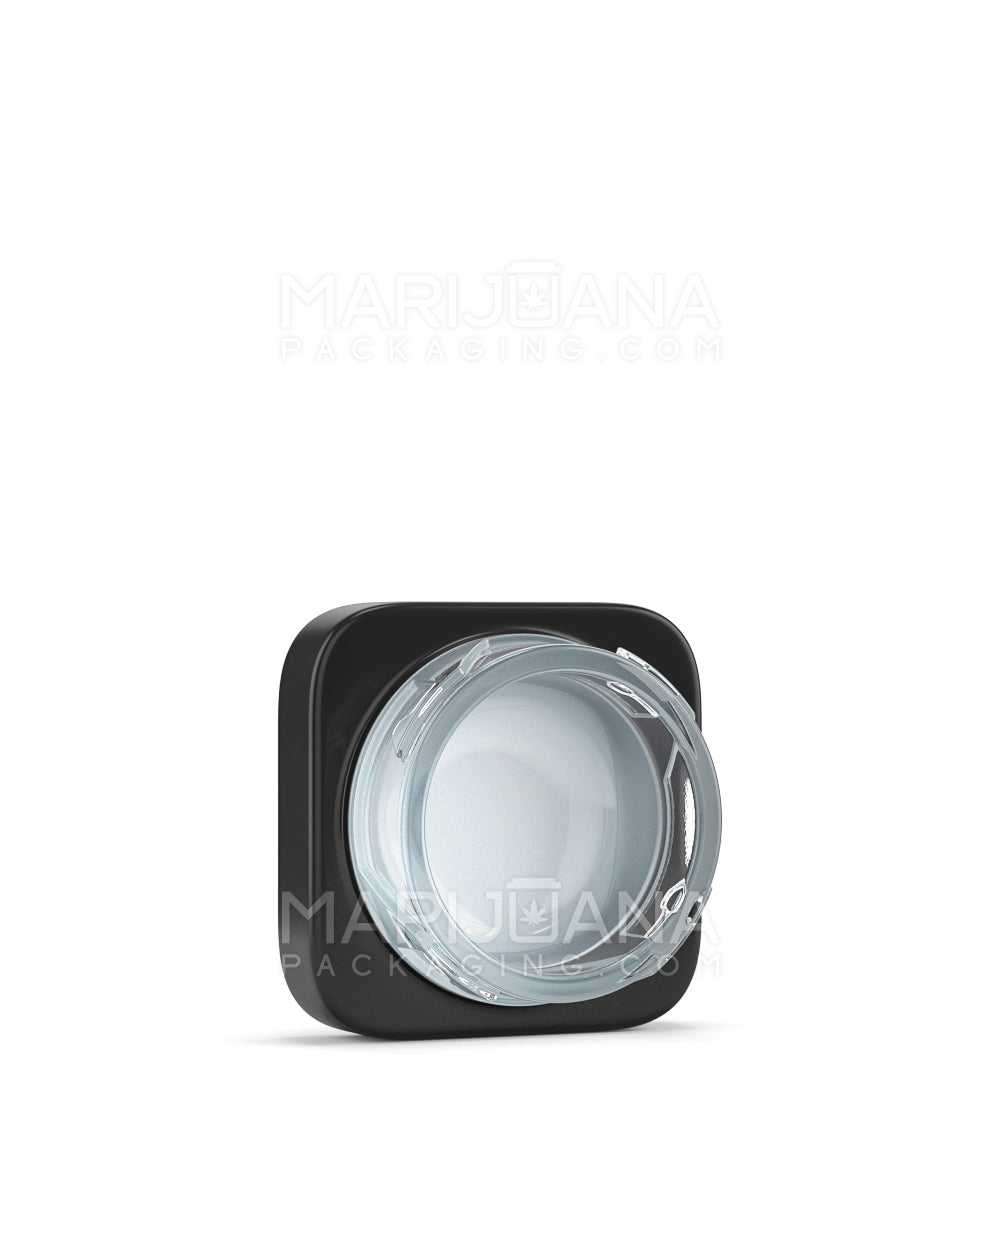 Child Resistant | Qube Black Glass Concentrate Jar w/ White Interior & Black Cap | 32mm - 5mL - 250 Count - 5